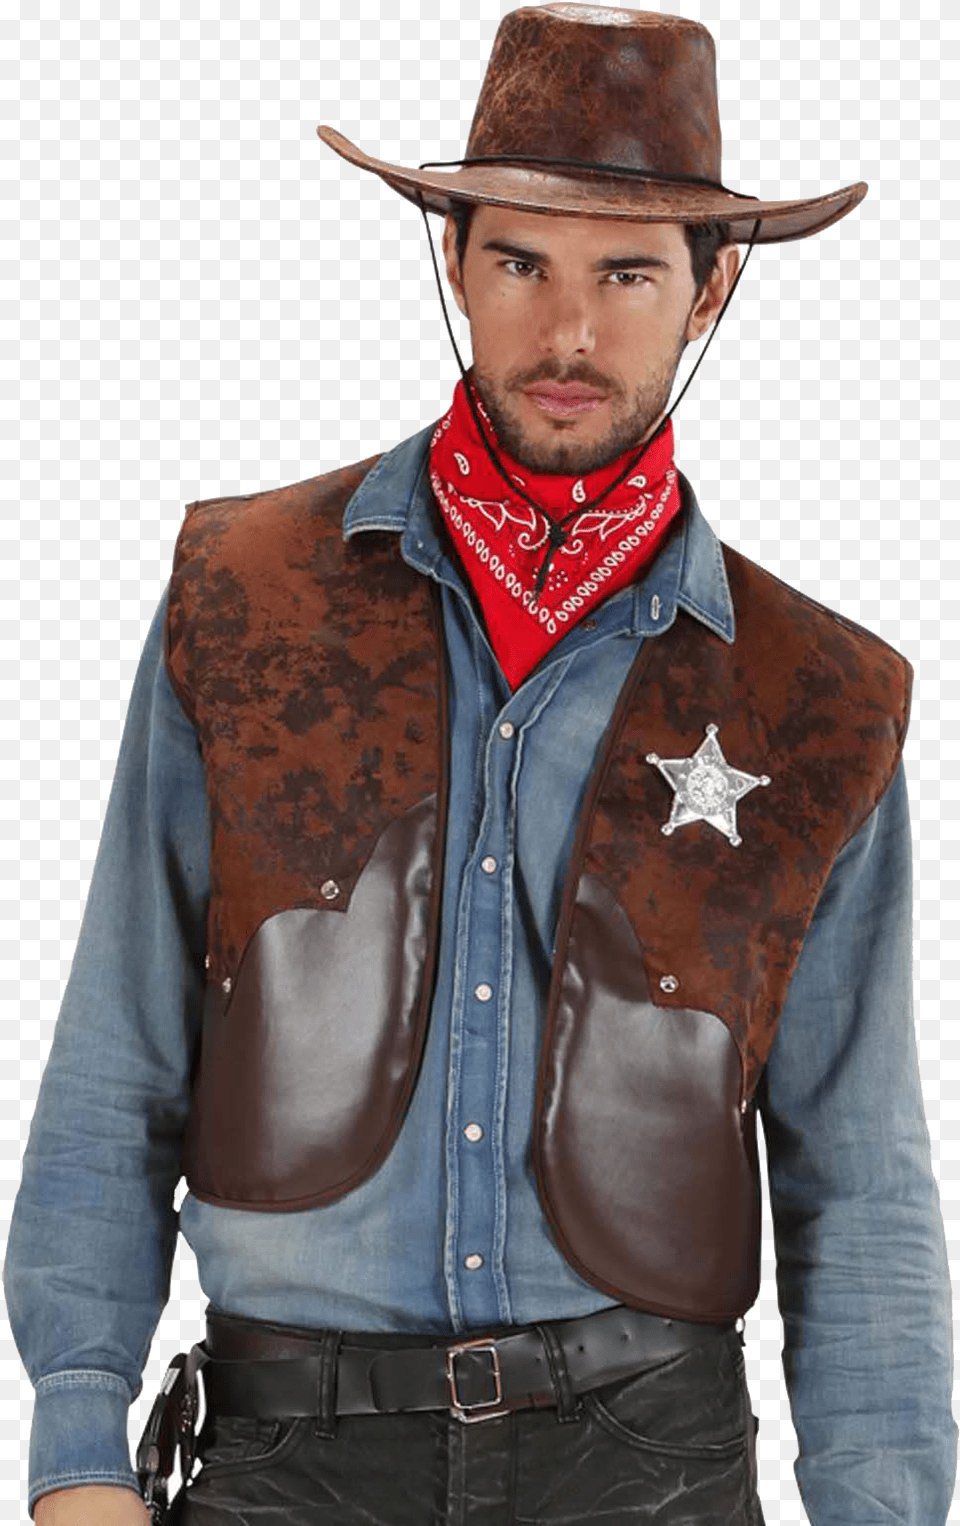 Sheriff Cowboy, Clothing, Hat, Vest, Accessories Png Image